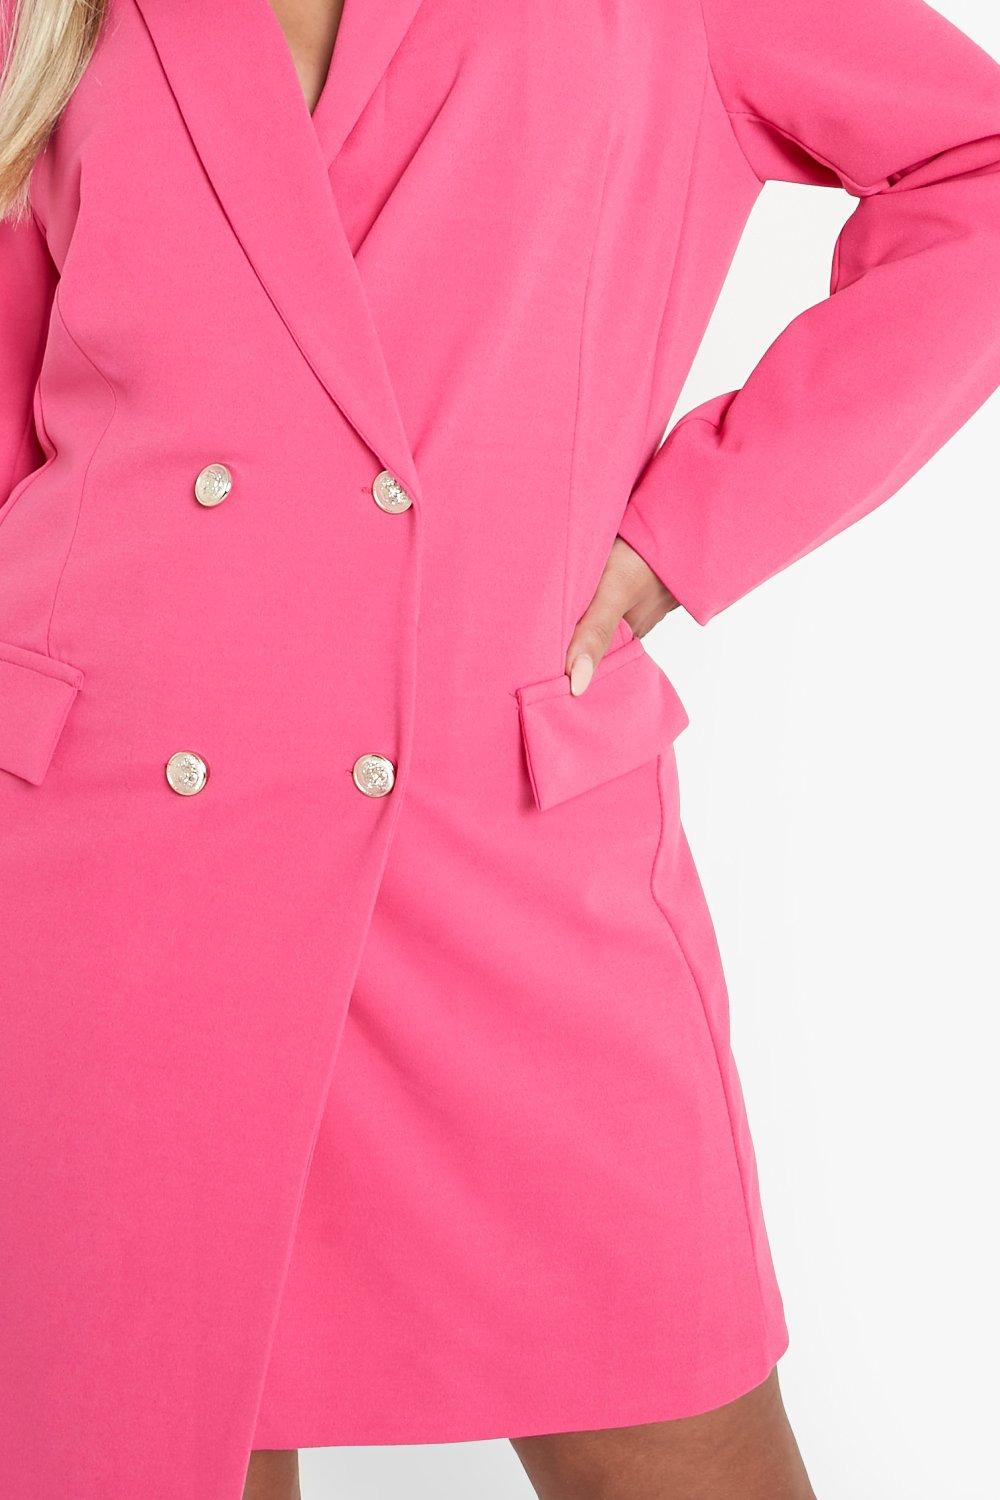 Unique21® Blazer Dress, Luxe Stain Breasted Hot Pink Blazer Dress